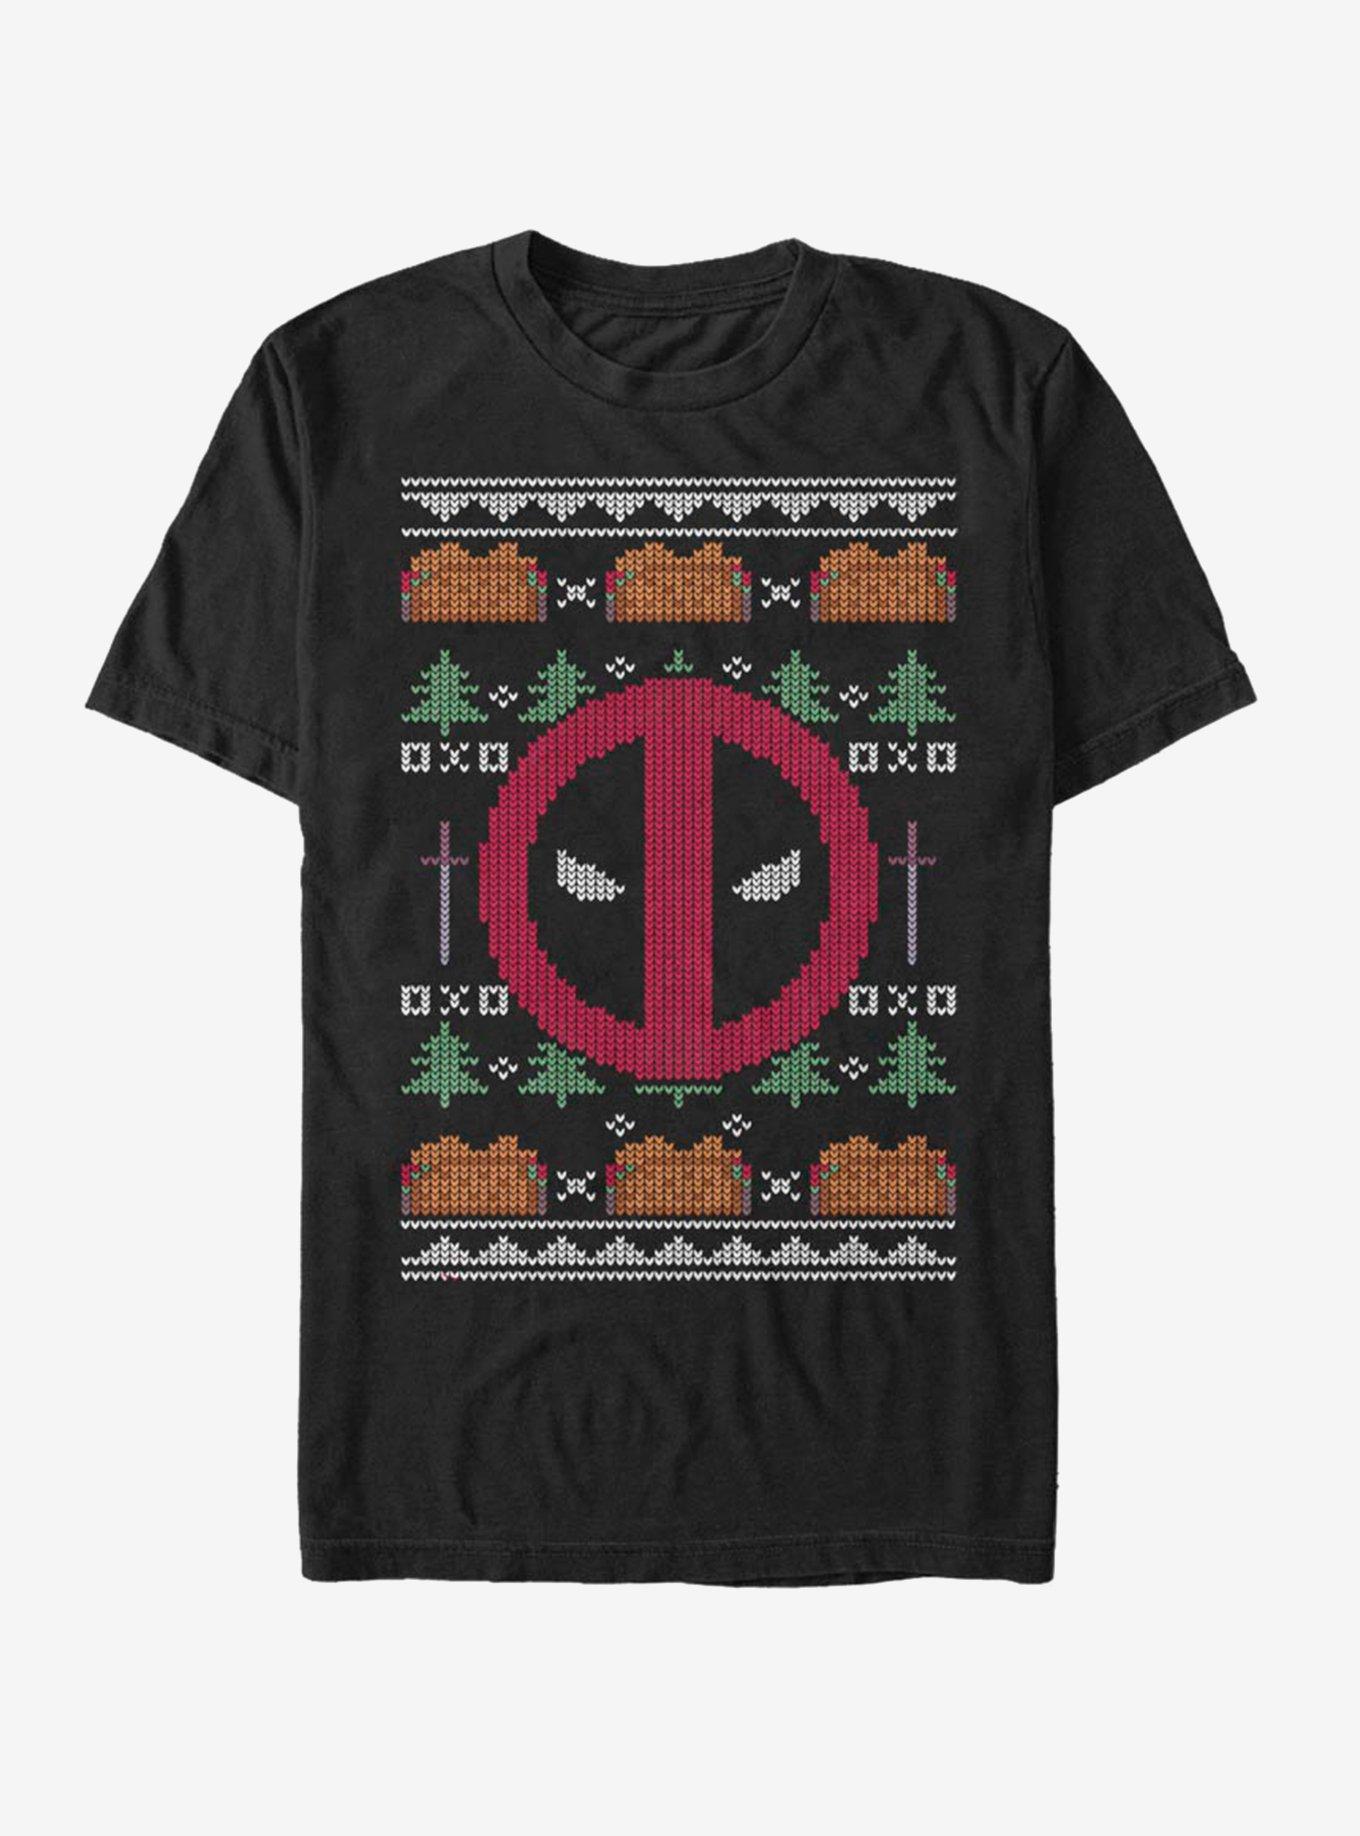 Marvel Deadpool Face Ugly Christmas T-Shirt, BLACK, hi-res